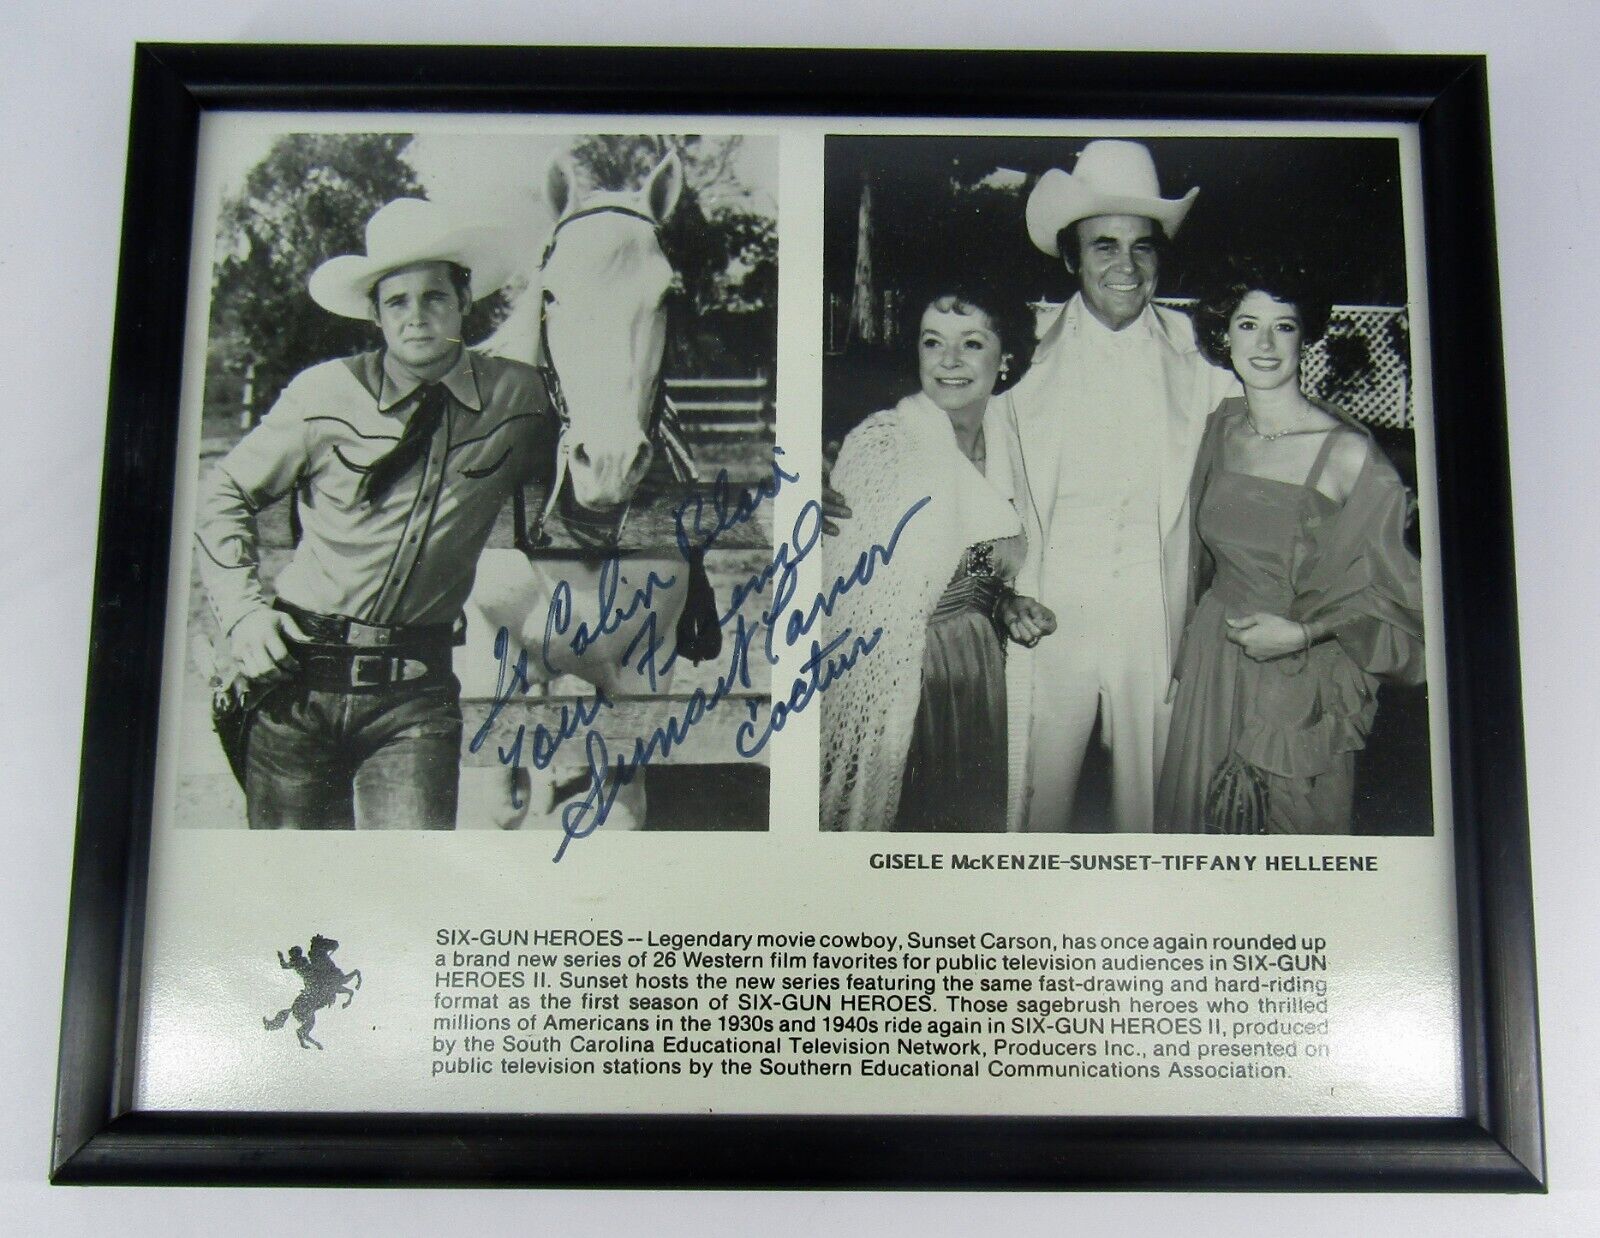 SUNSET CARSON COWBOY ACTOR - Signed / Autographed Publicity Still Photo 10x8 -